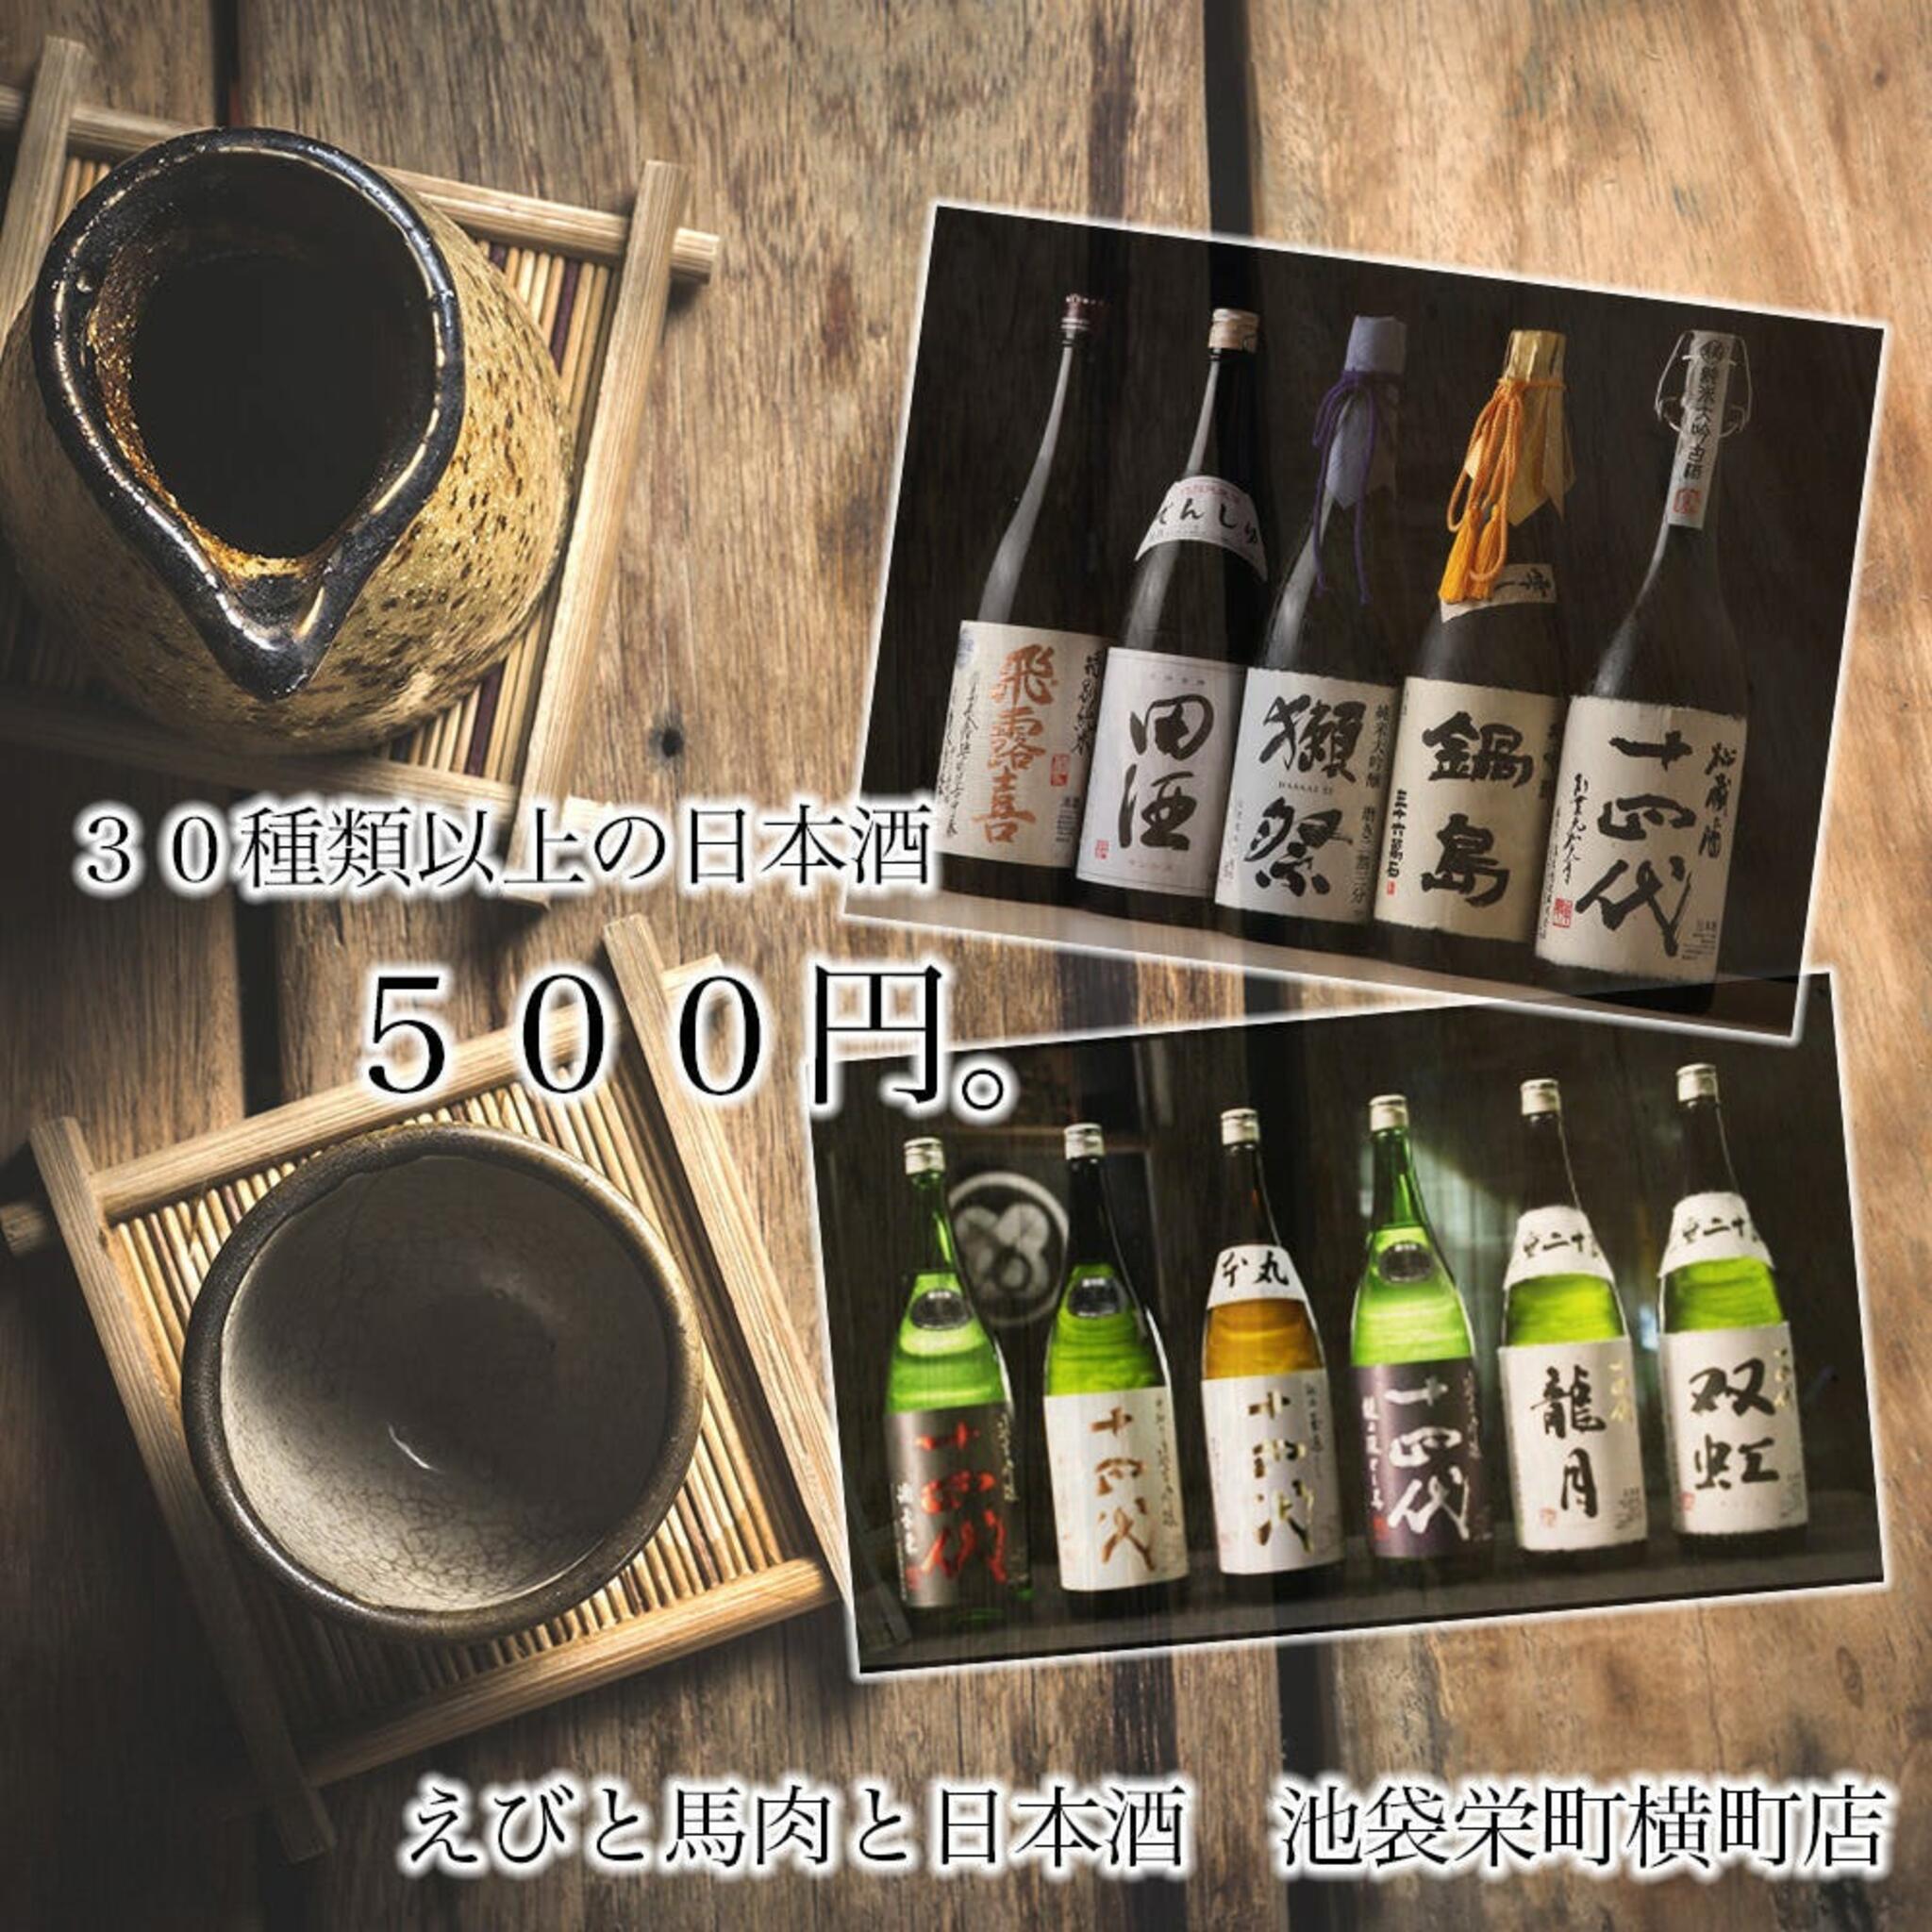 海老と馬肉と日本酒の居酒屋 池袋栄町横町店の代表写真9